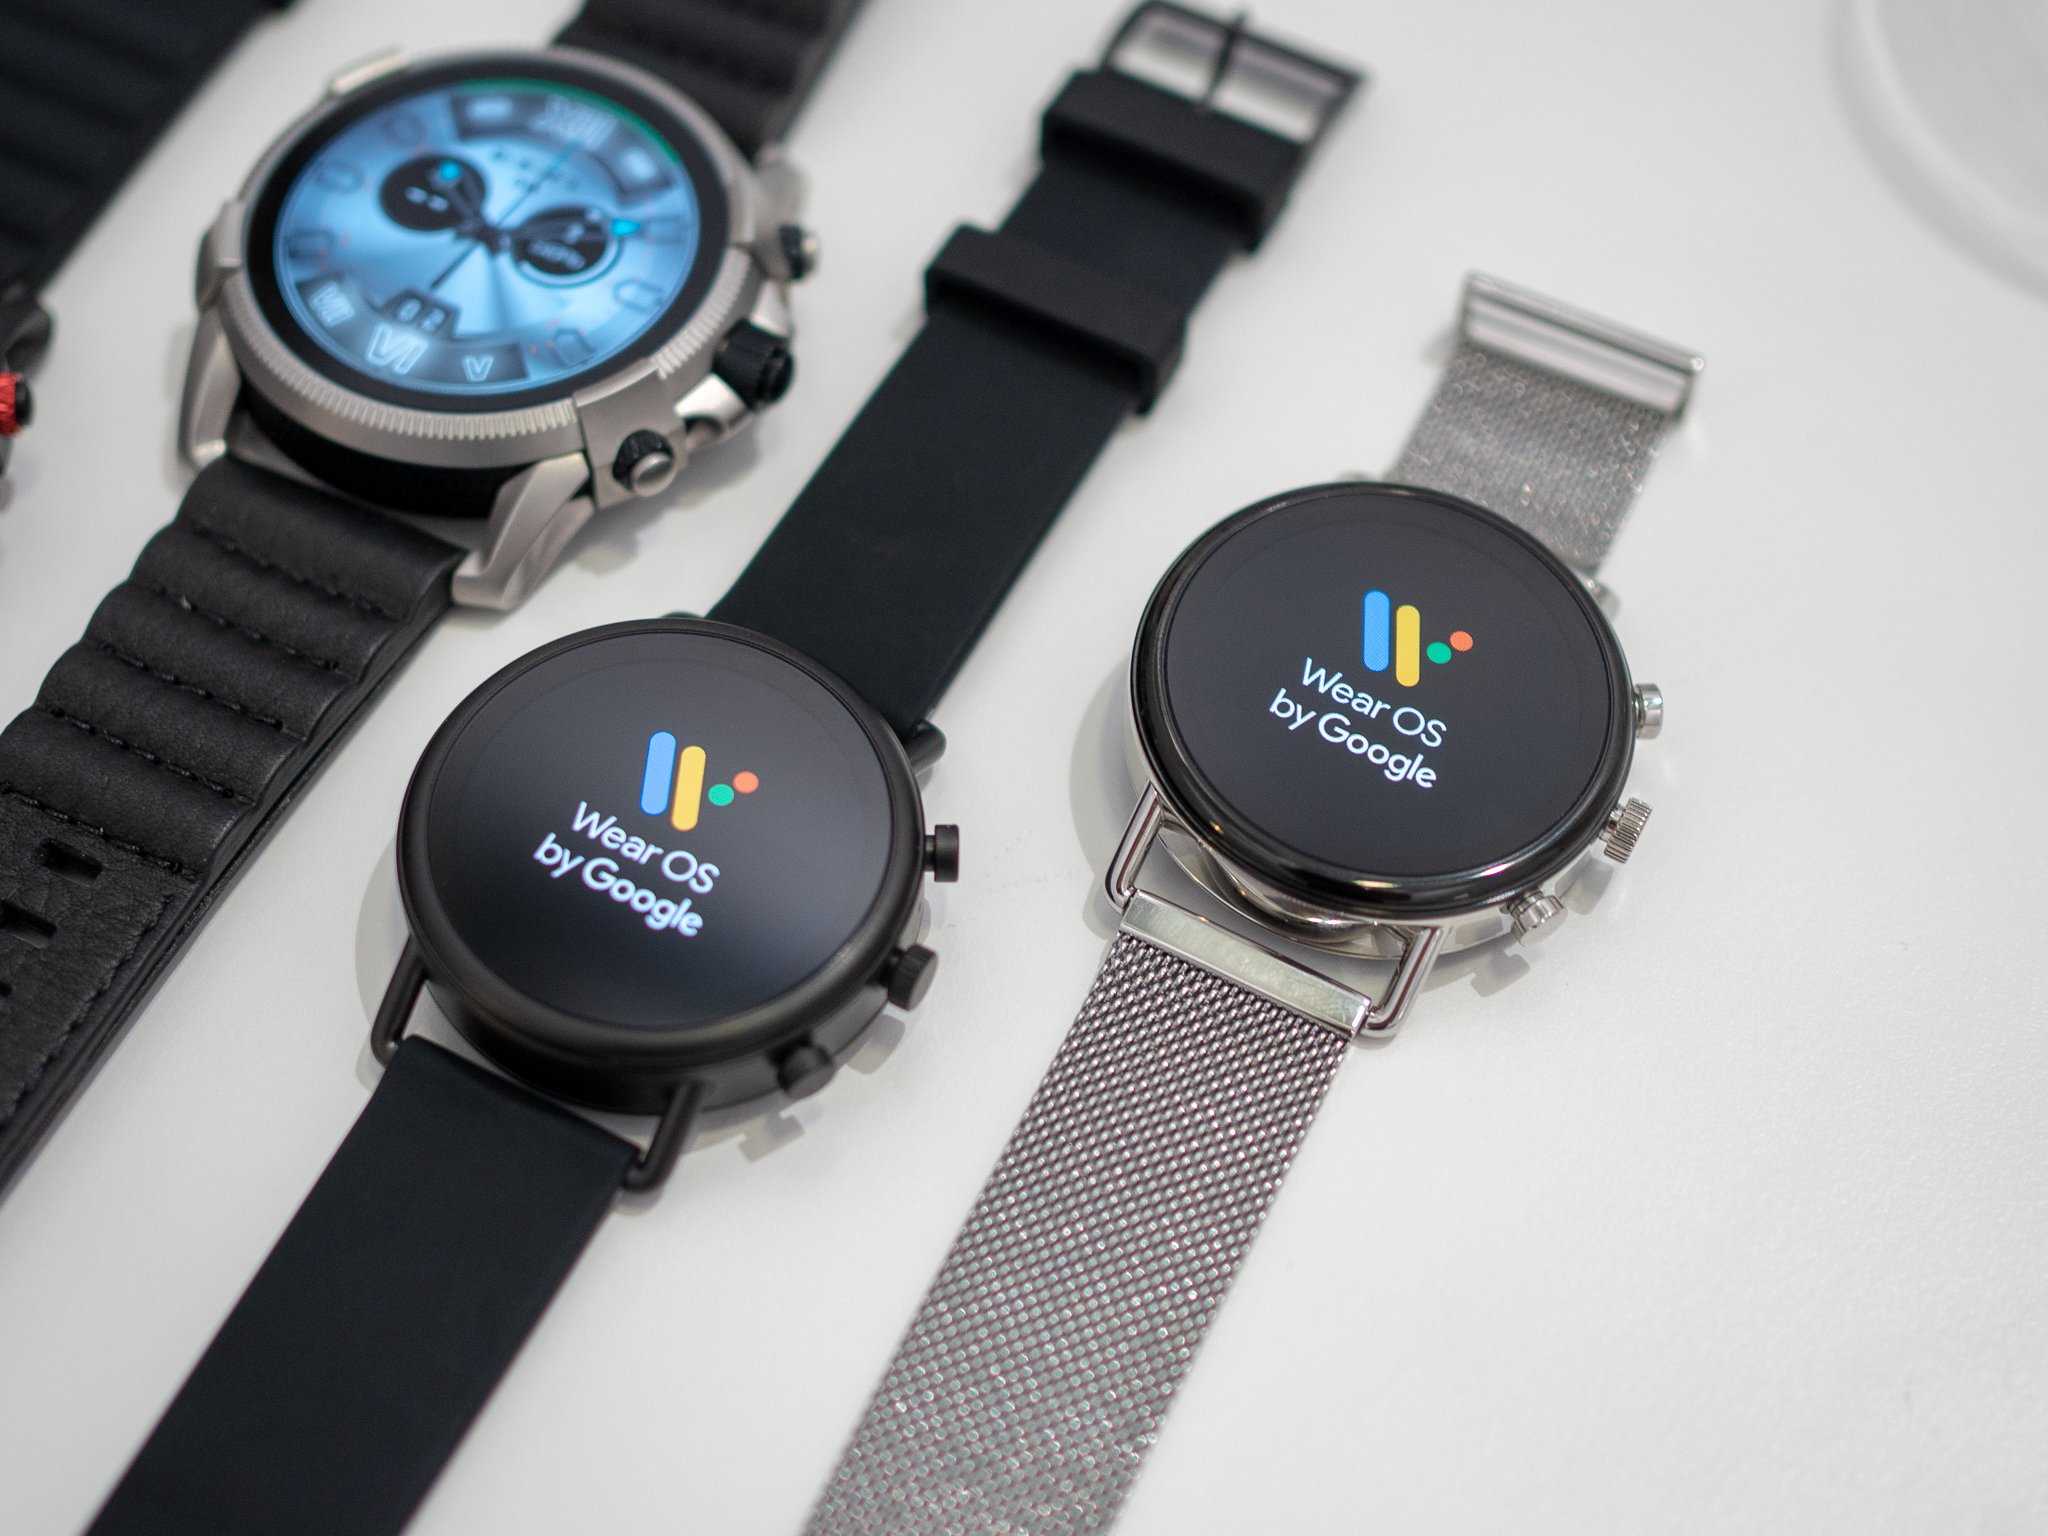 Wear os watches. Гугл вотч часы. Wear os смарт часы. Wear os by Google часы. Часы на Wear os 2021.